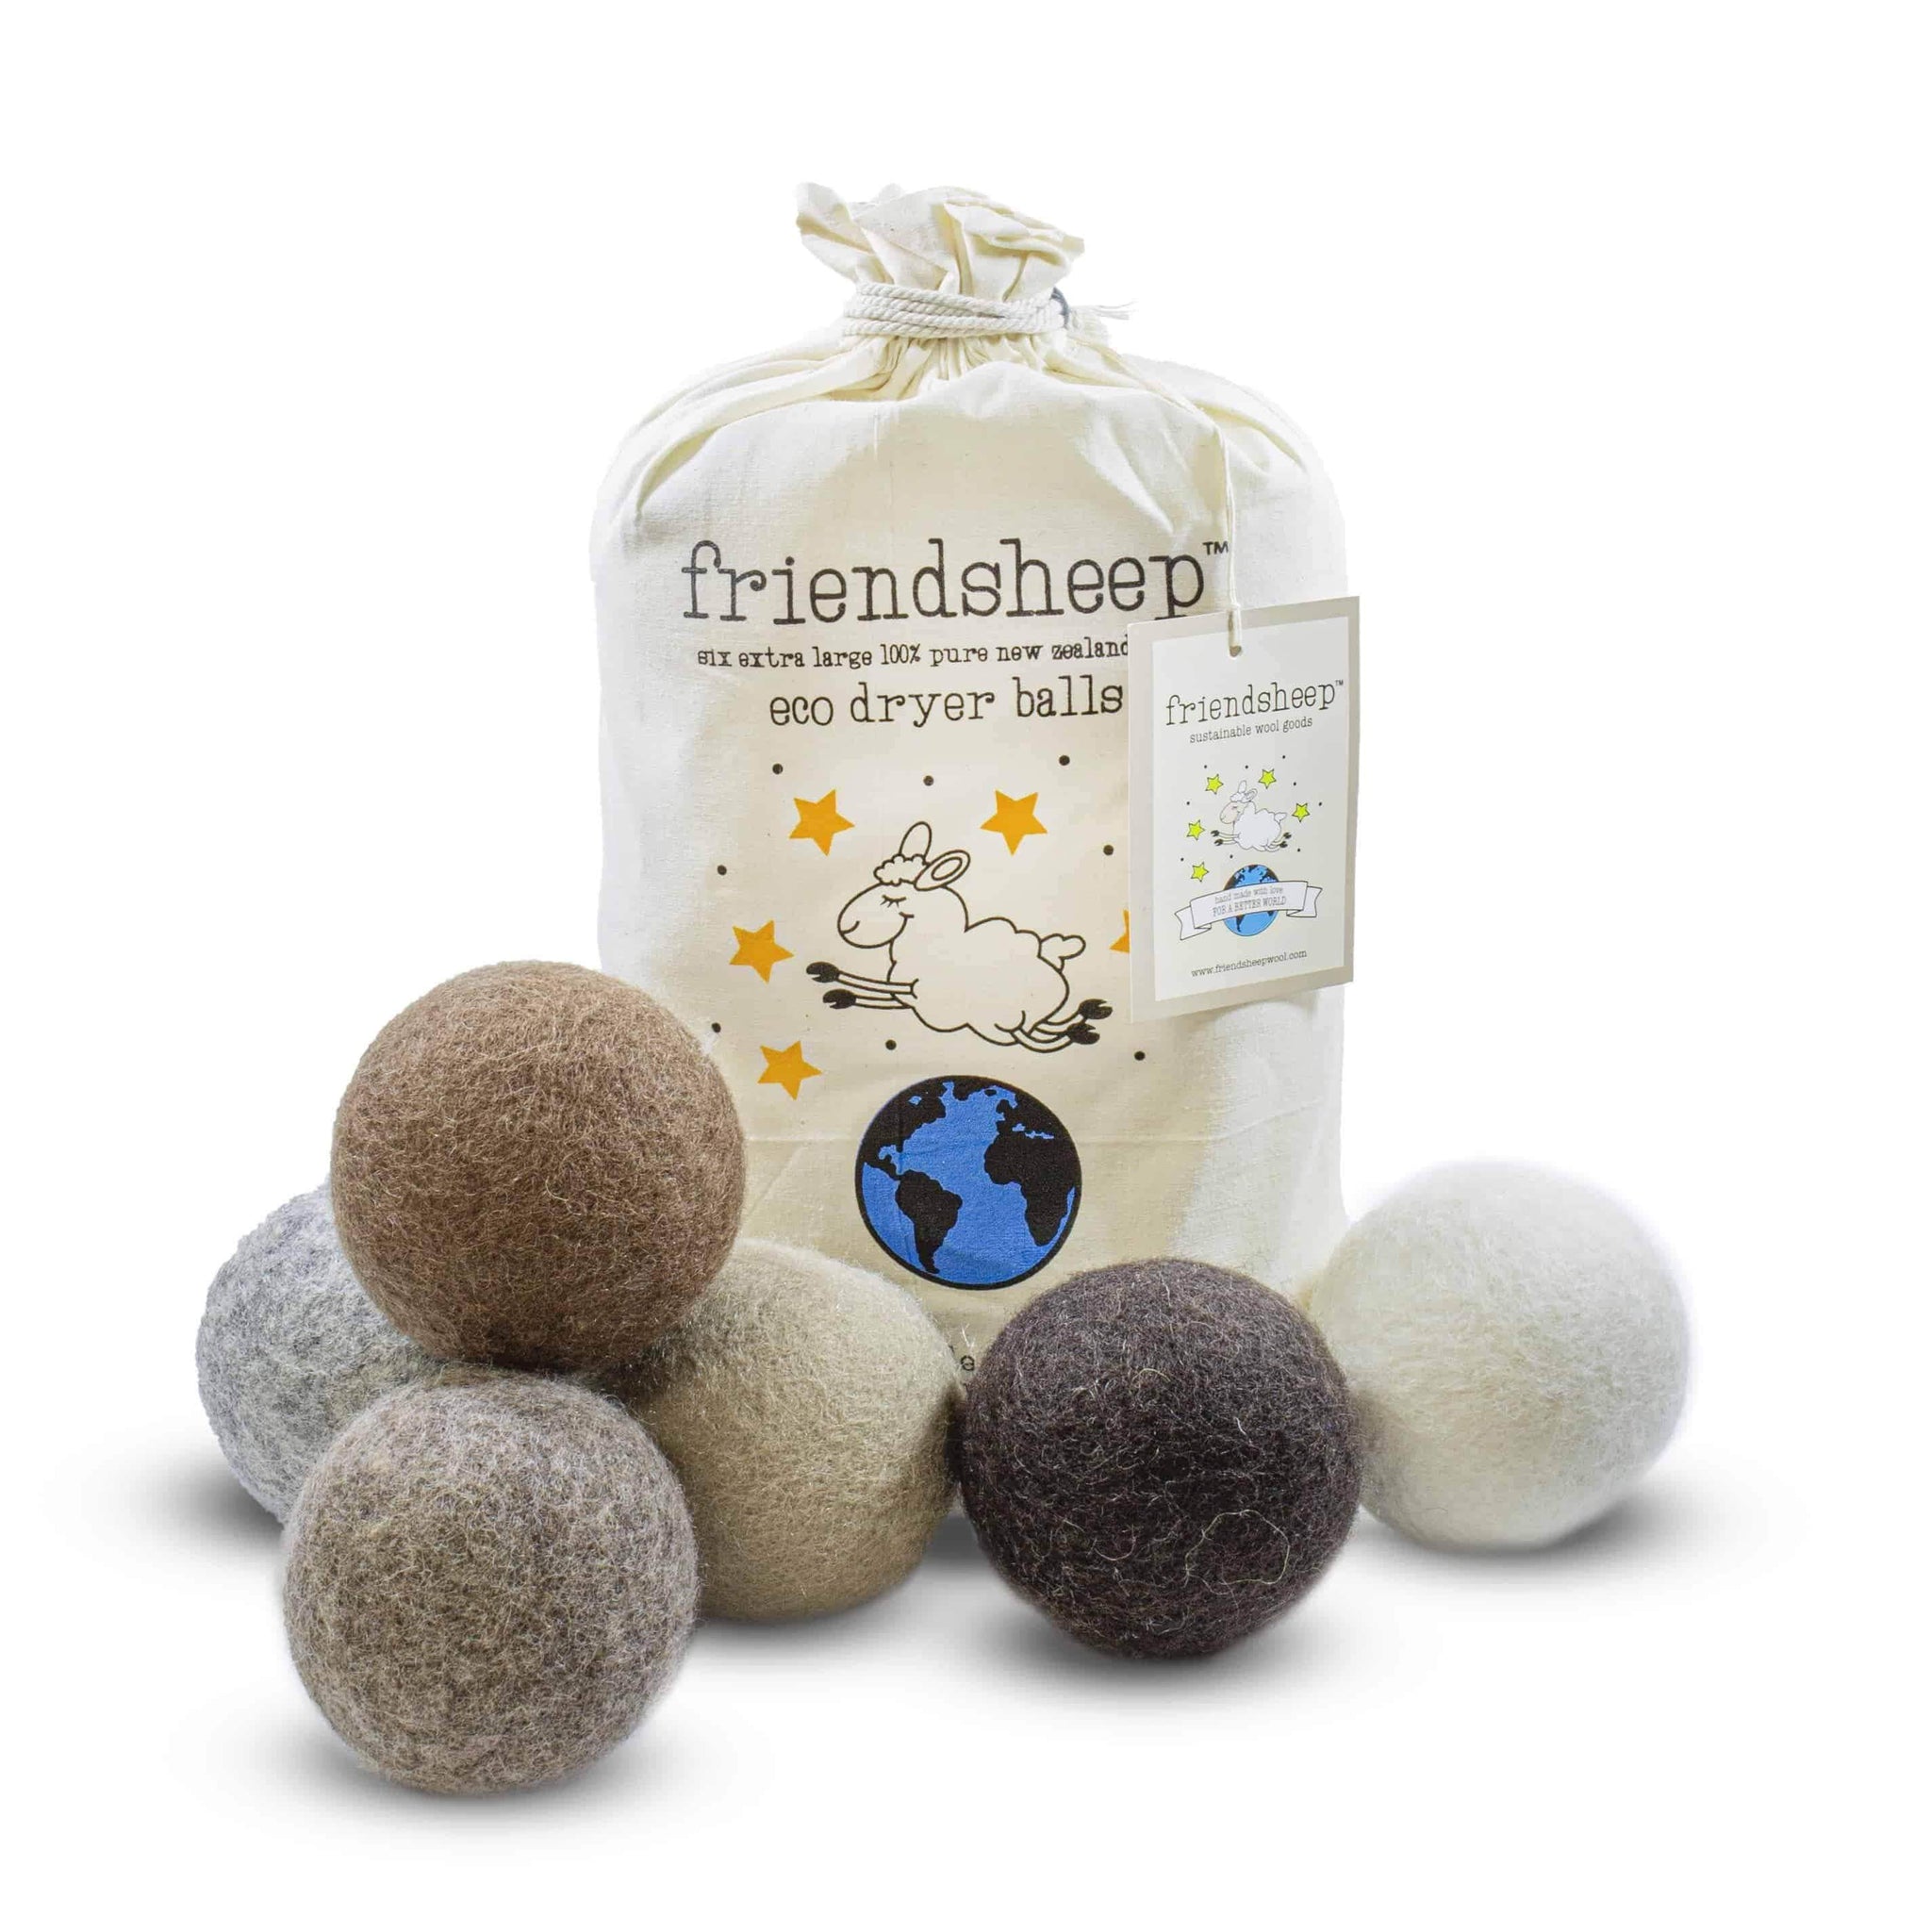 Friendsheep Laundrybugs Eco Dryer Balls